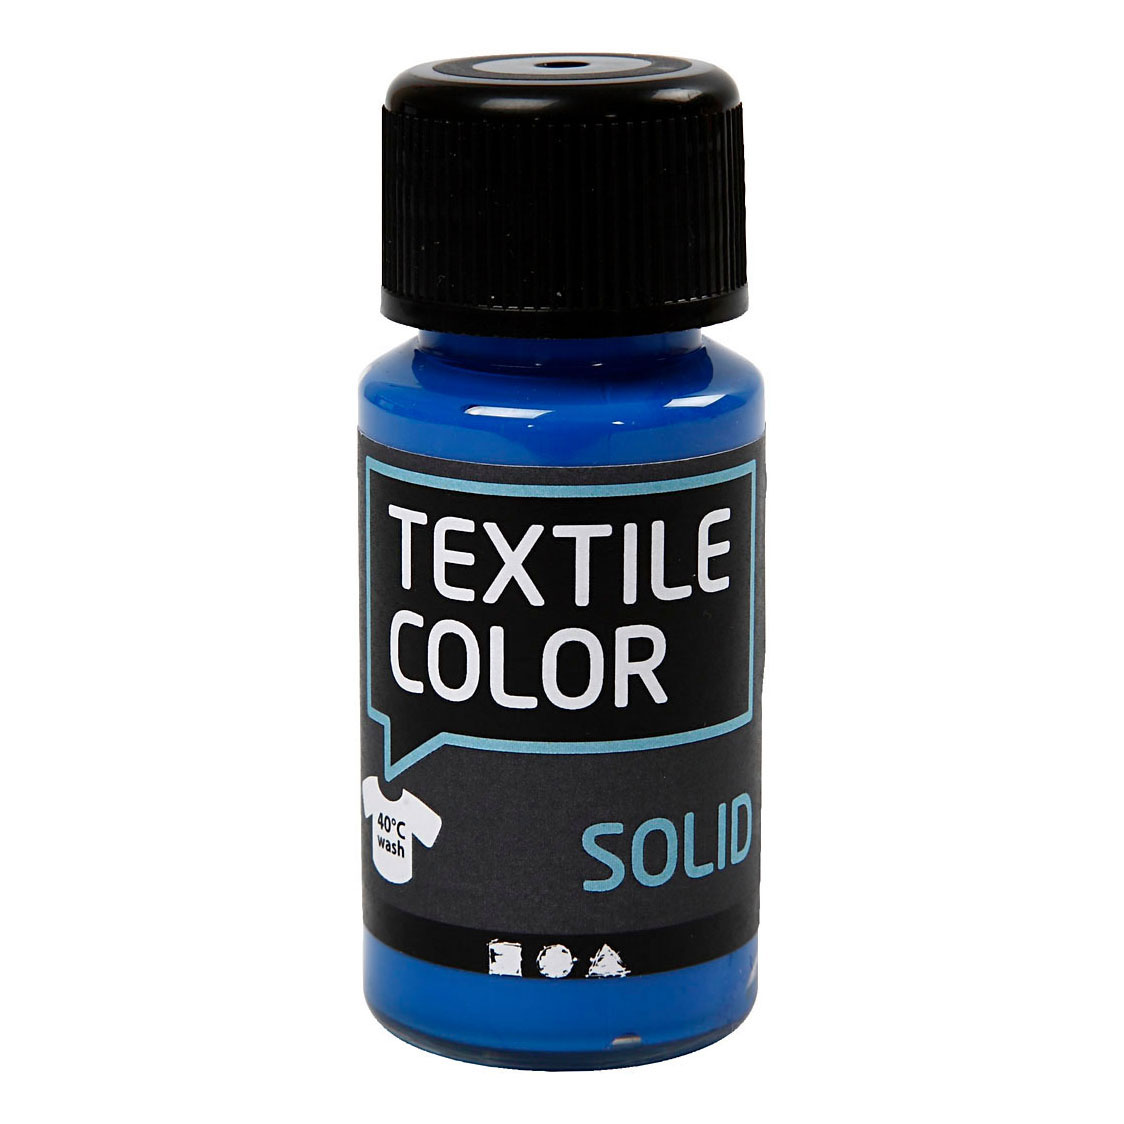 Textile Color Deckende Textilfarbe – Brillantblau, 50 ml